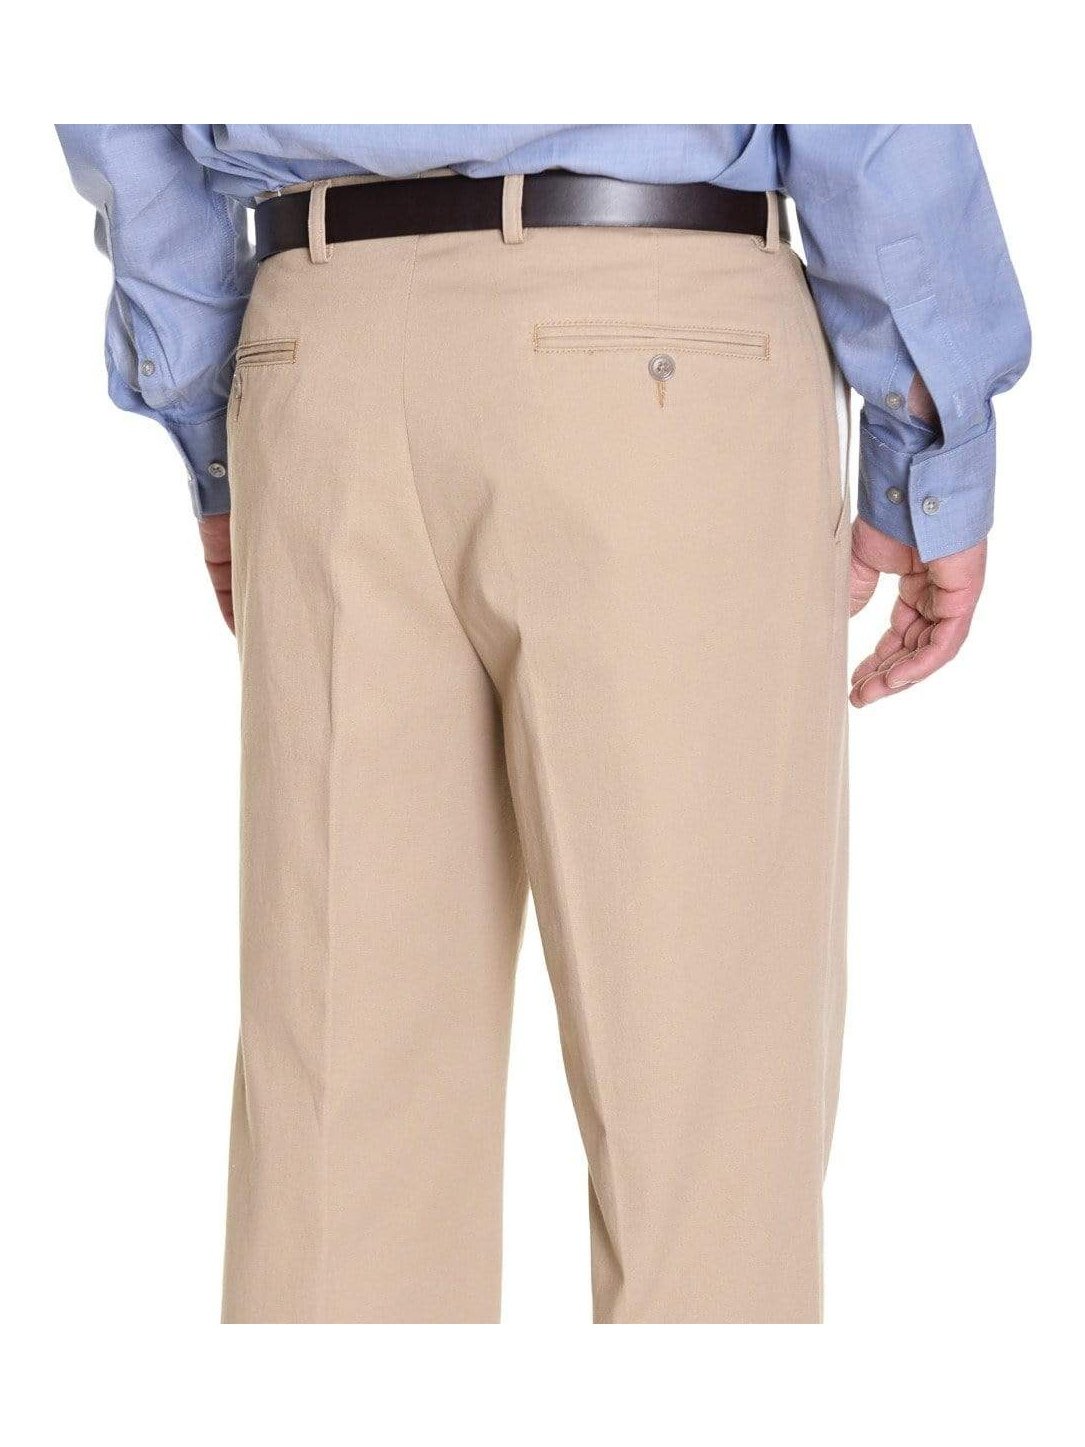 Back View of Michael Kors Mens Solid Tan Flat Front Cotton Casual Chino Khaki Pants